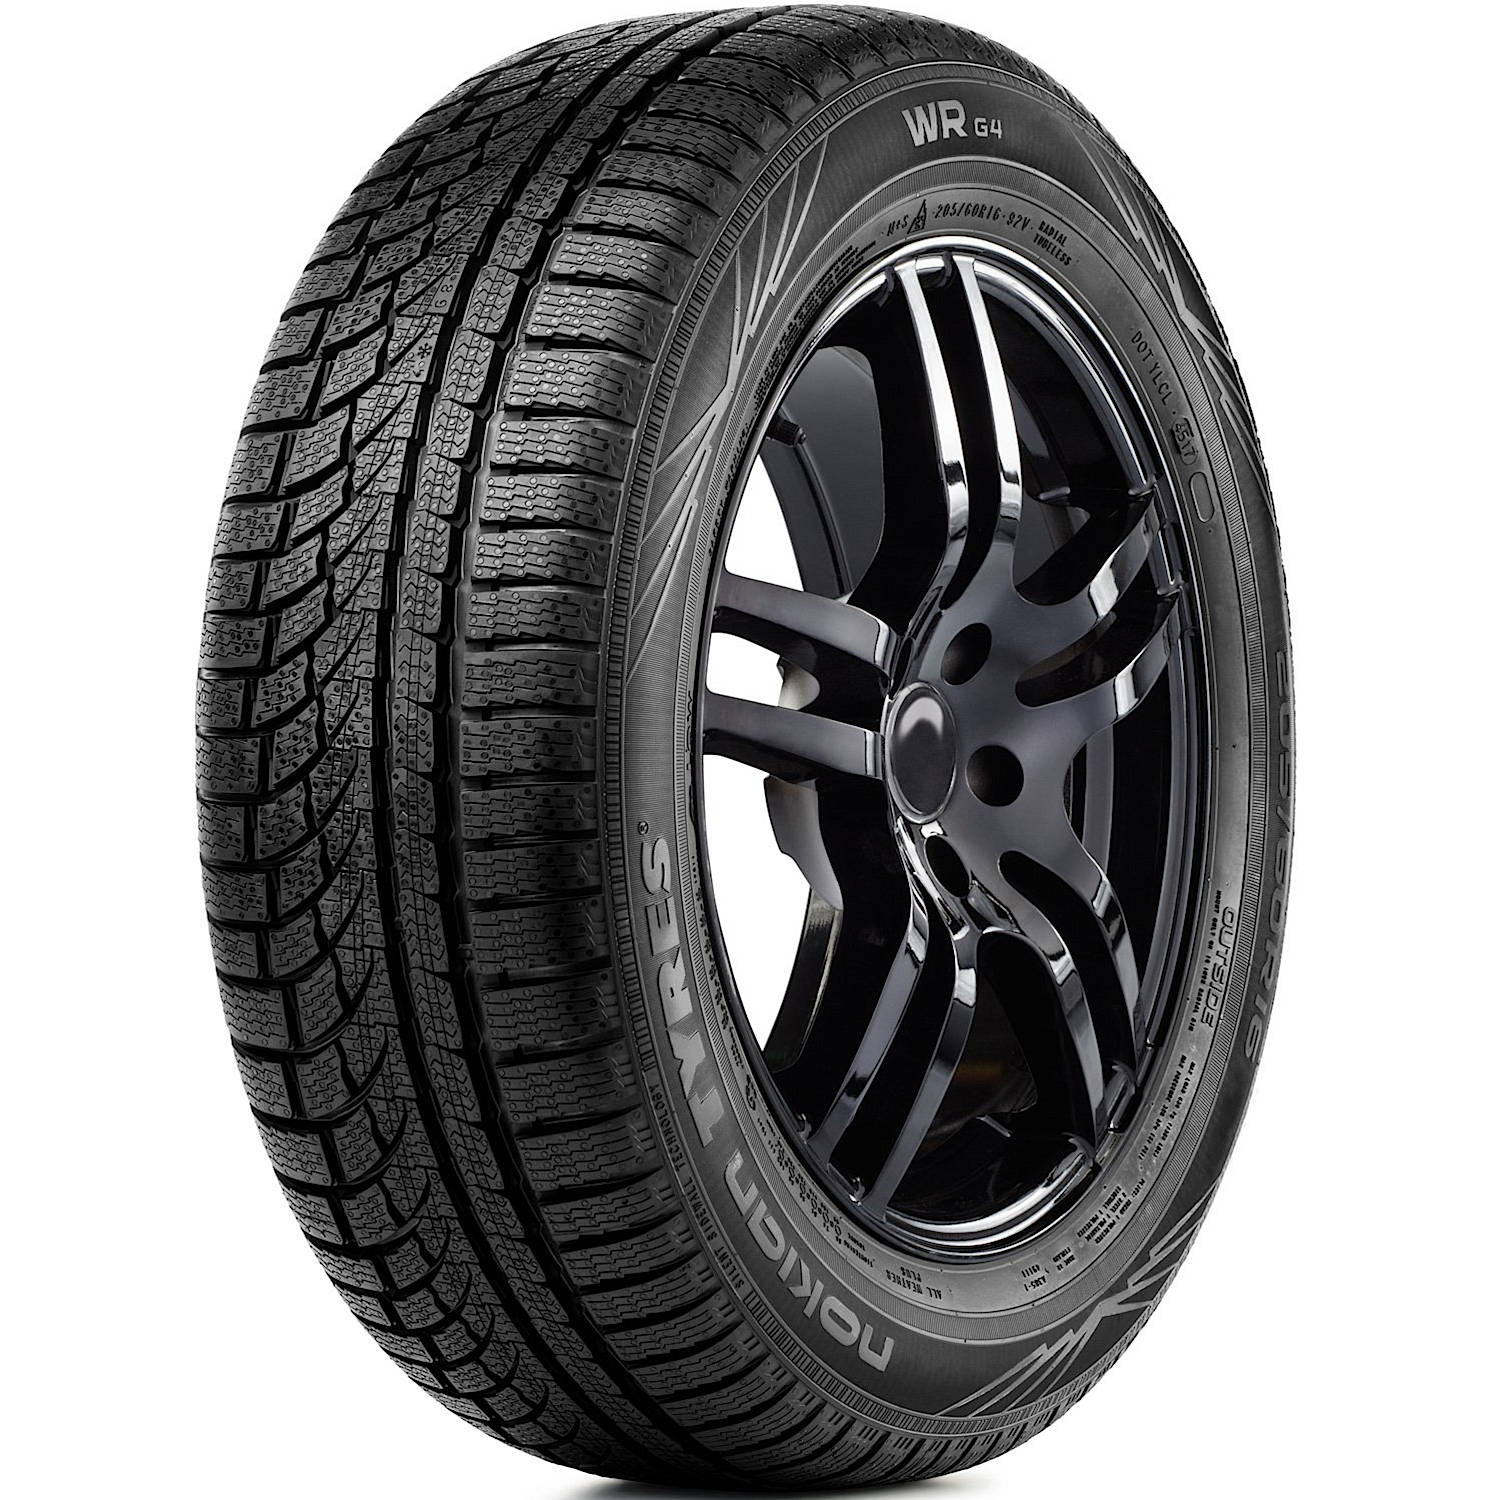 NOKIAN WR G4 185/60R15 (23.7X7.3R 15) Tires